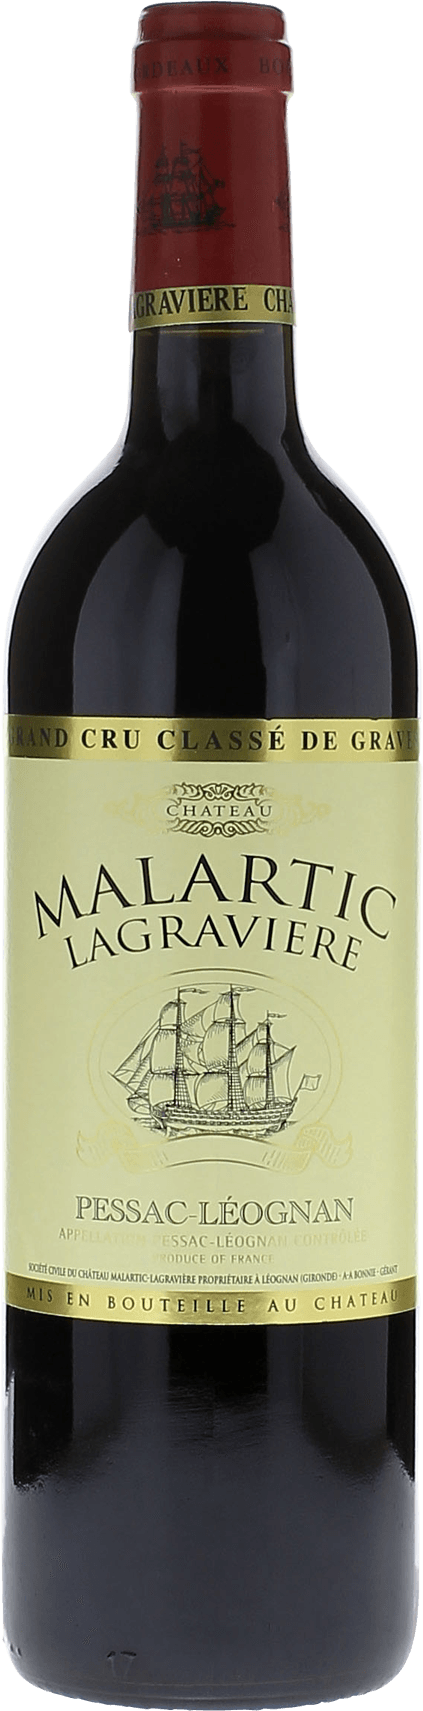 Malartic lagraviere rouge 2009 Grand Cru Class Graves, Bordeaux rouge